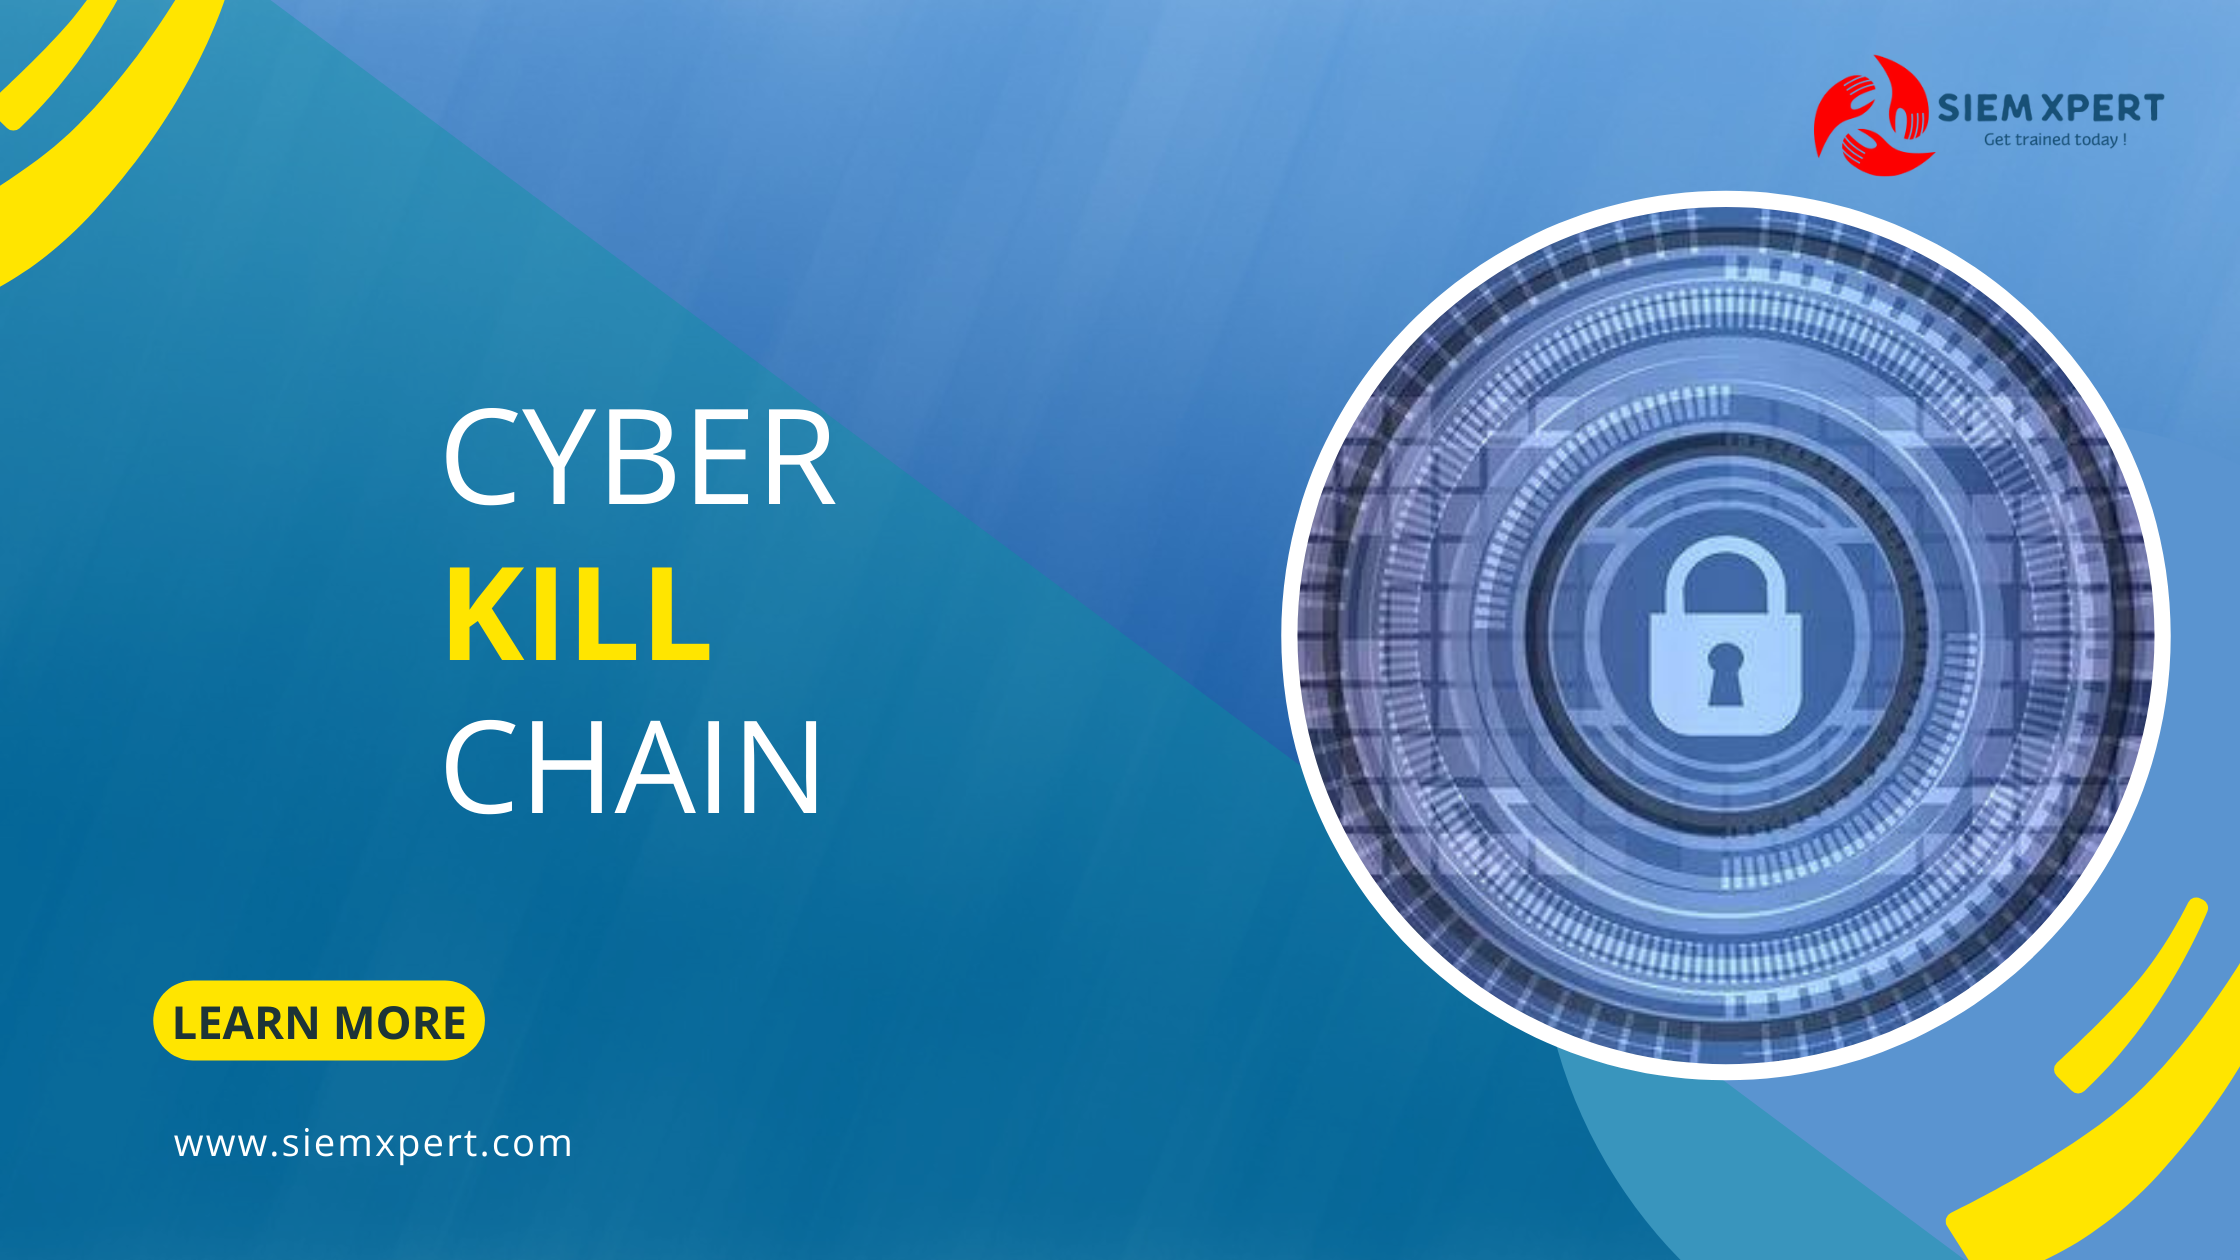 Cyber Kill Chain | Presentation slides templates, Cyber, Slide design